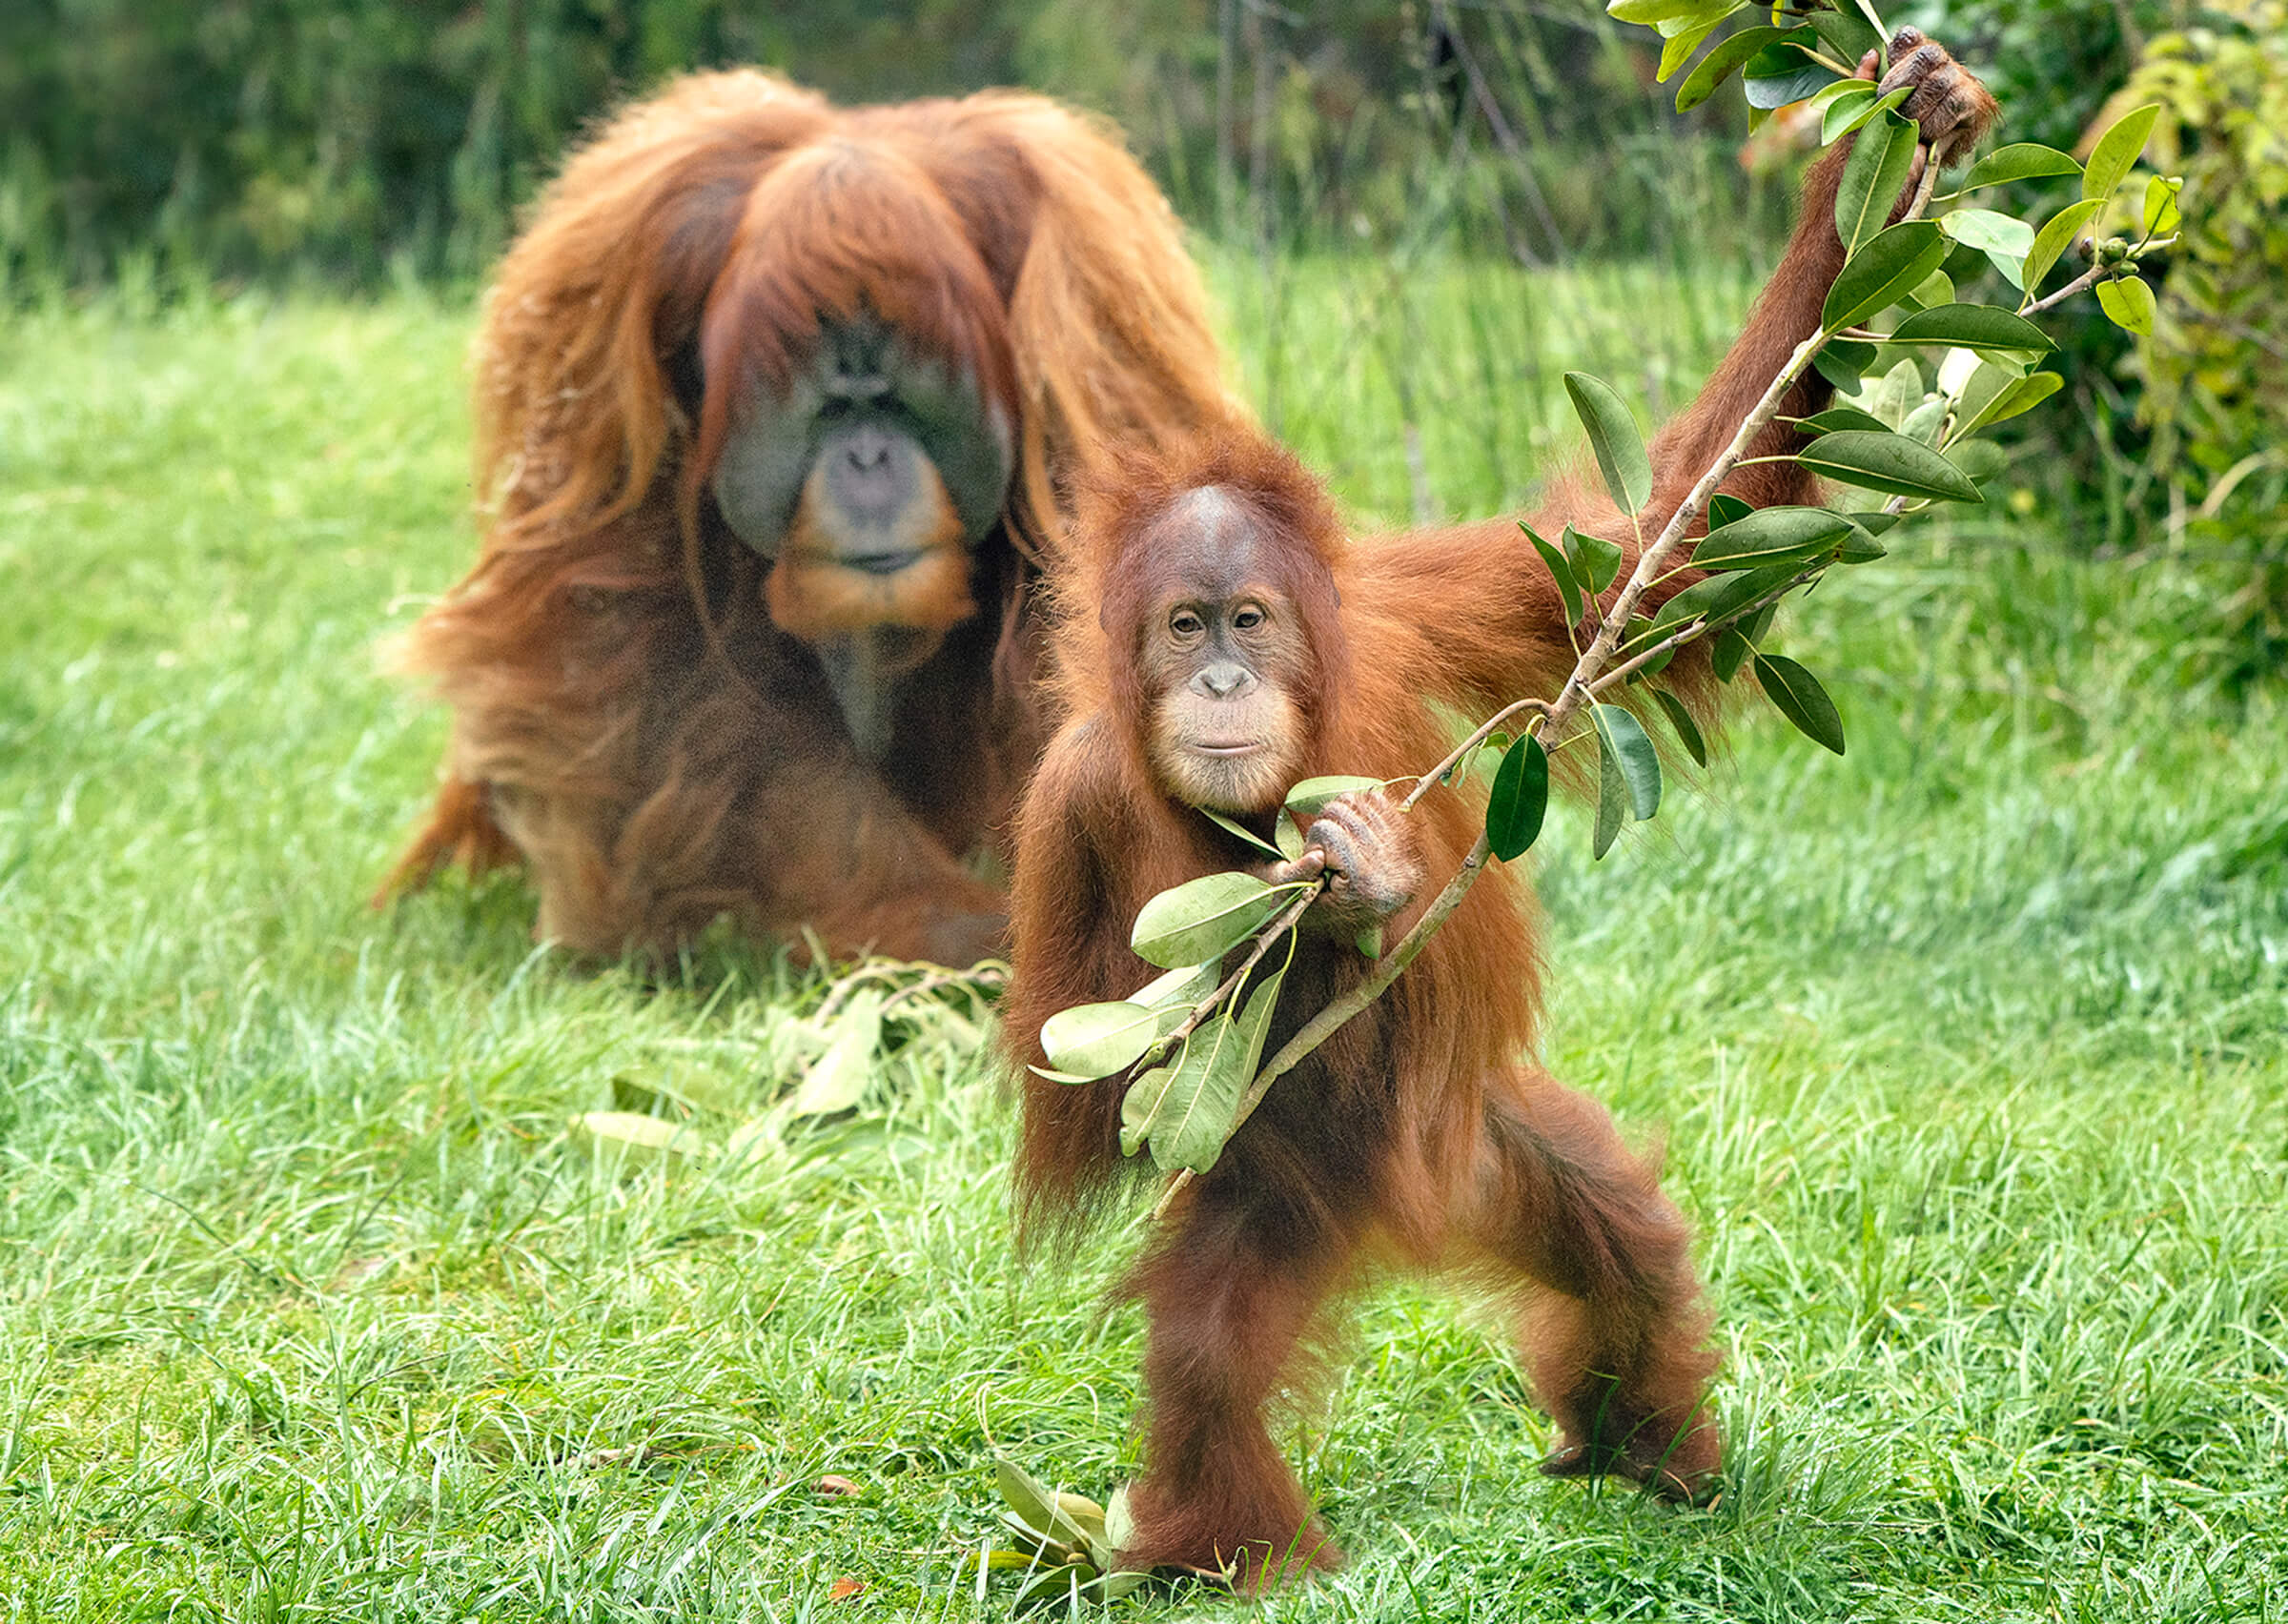 Amazing Red Apes – San Diego Zoo Wildlife Alliance Stories